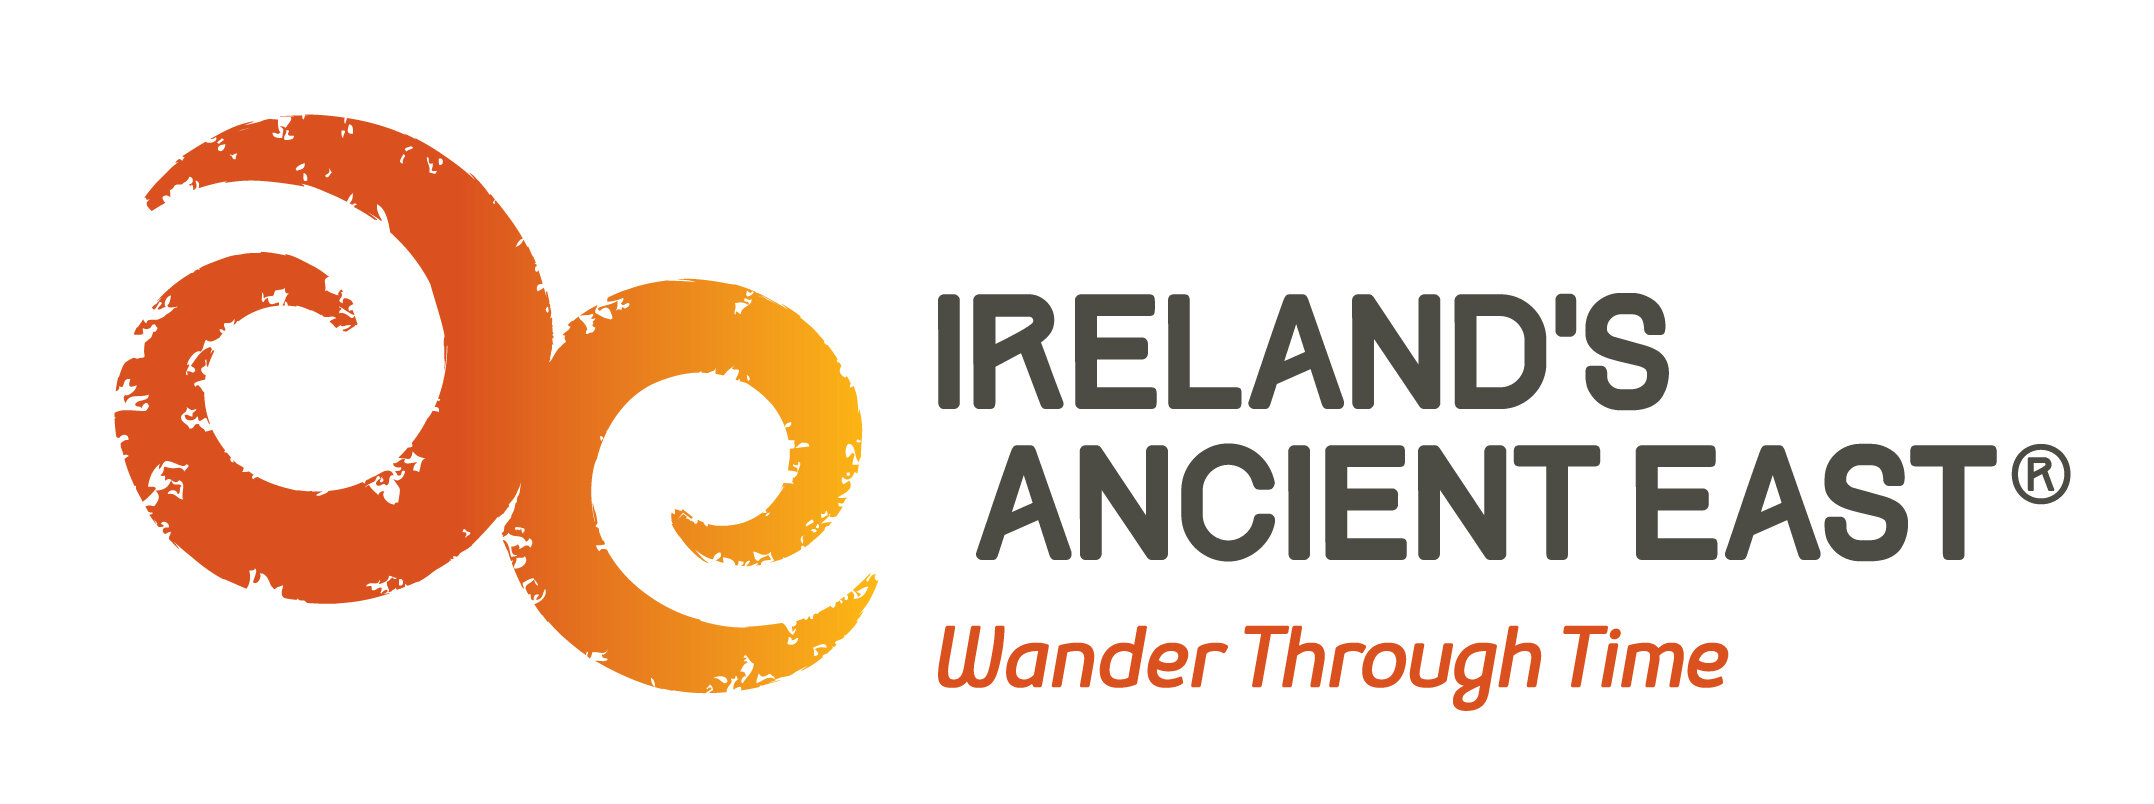 IrelandsAncientEast-REG_Logo-Tagline_Col.jpg